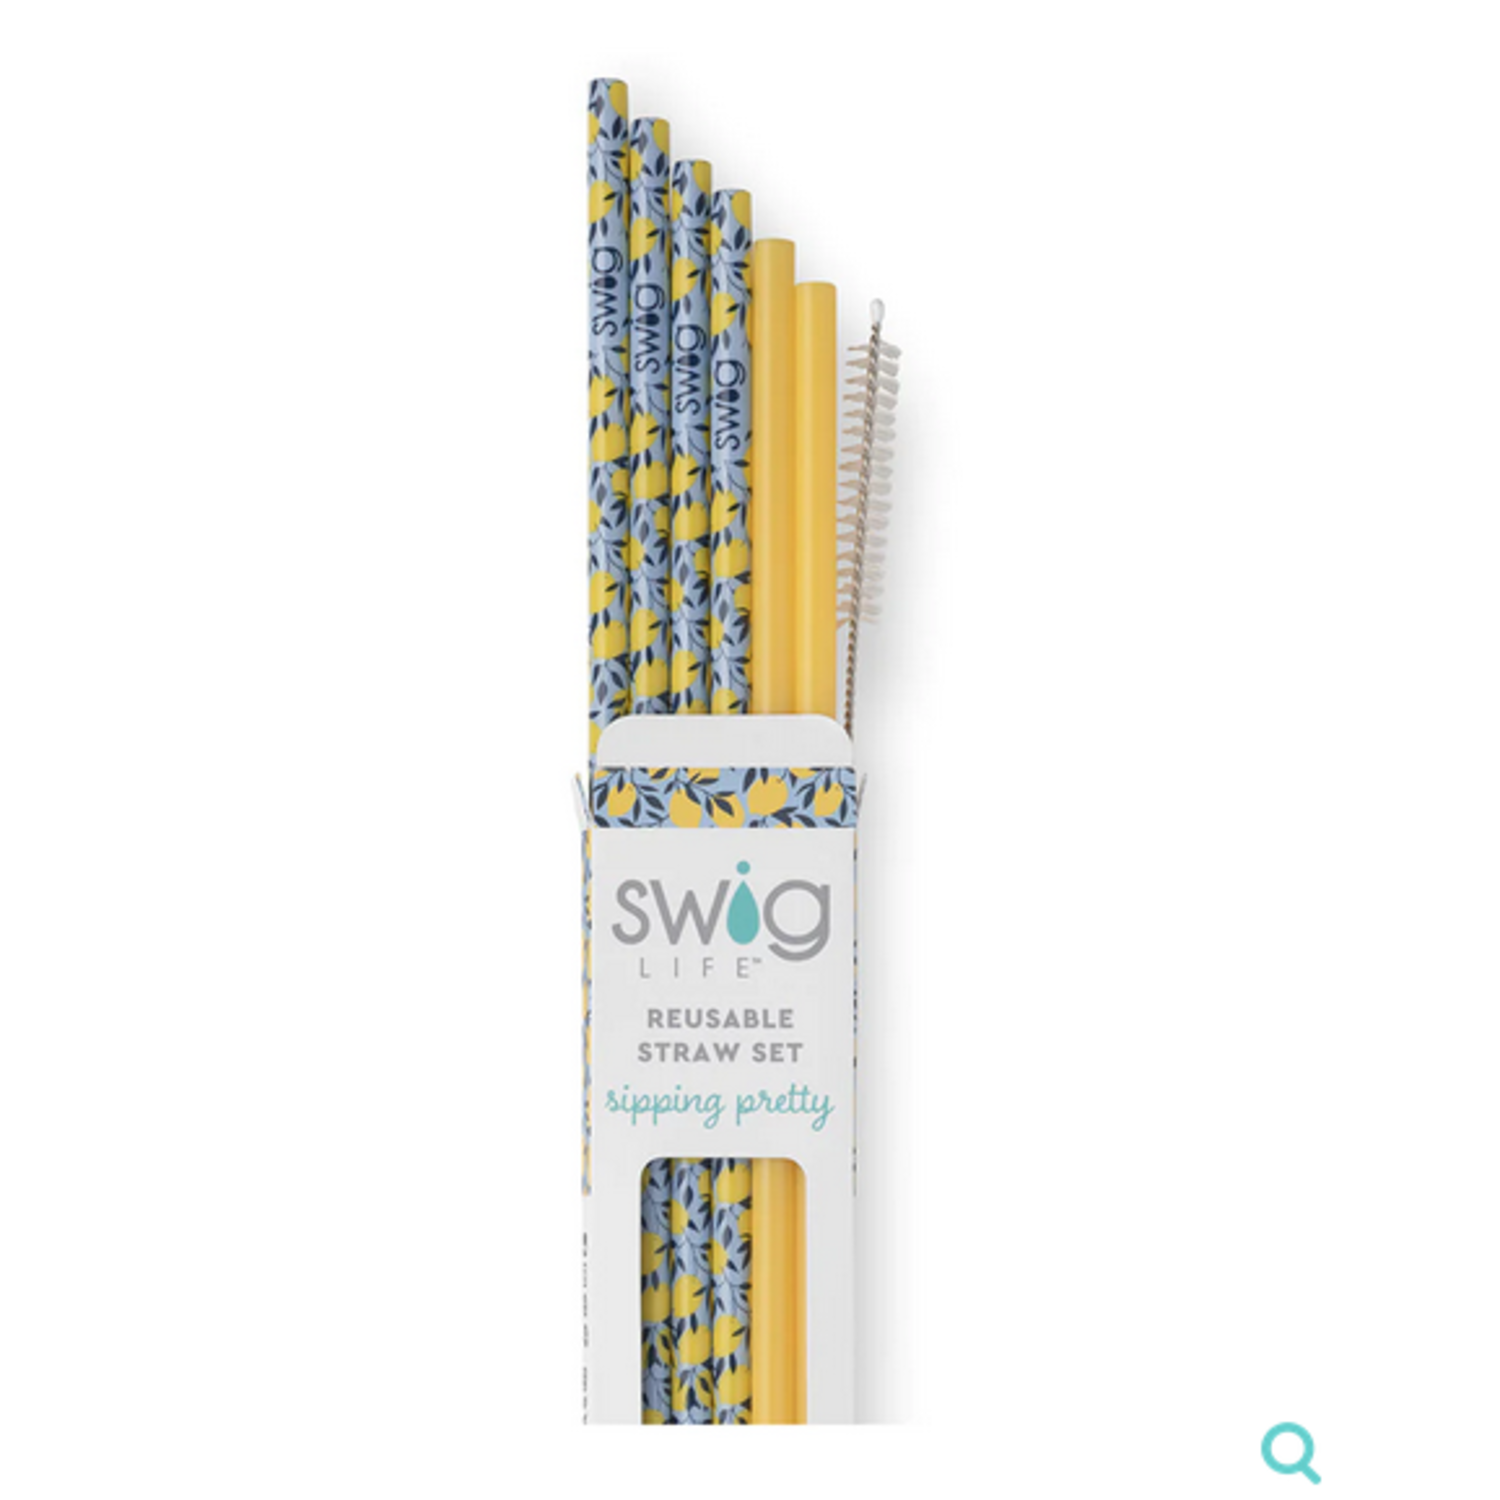 https://cdn.shoplightspeed.com/shops/613207/files/54026095/1500x4000x3/swig-life-reusable-straw-set.jpg